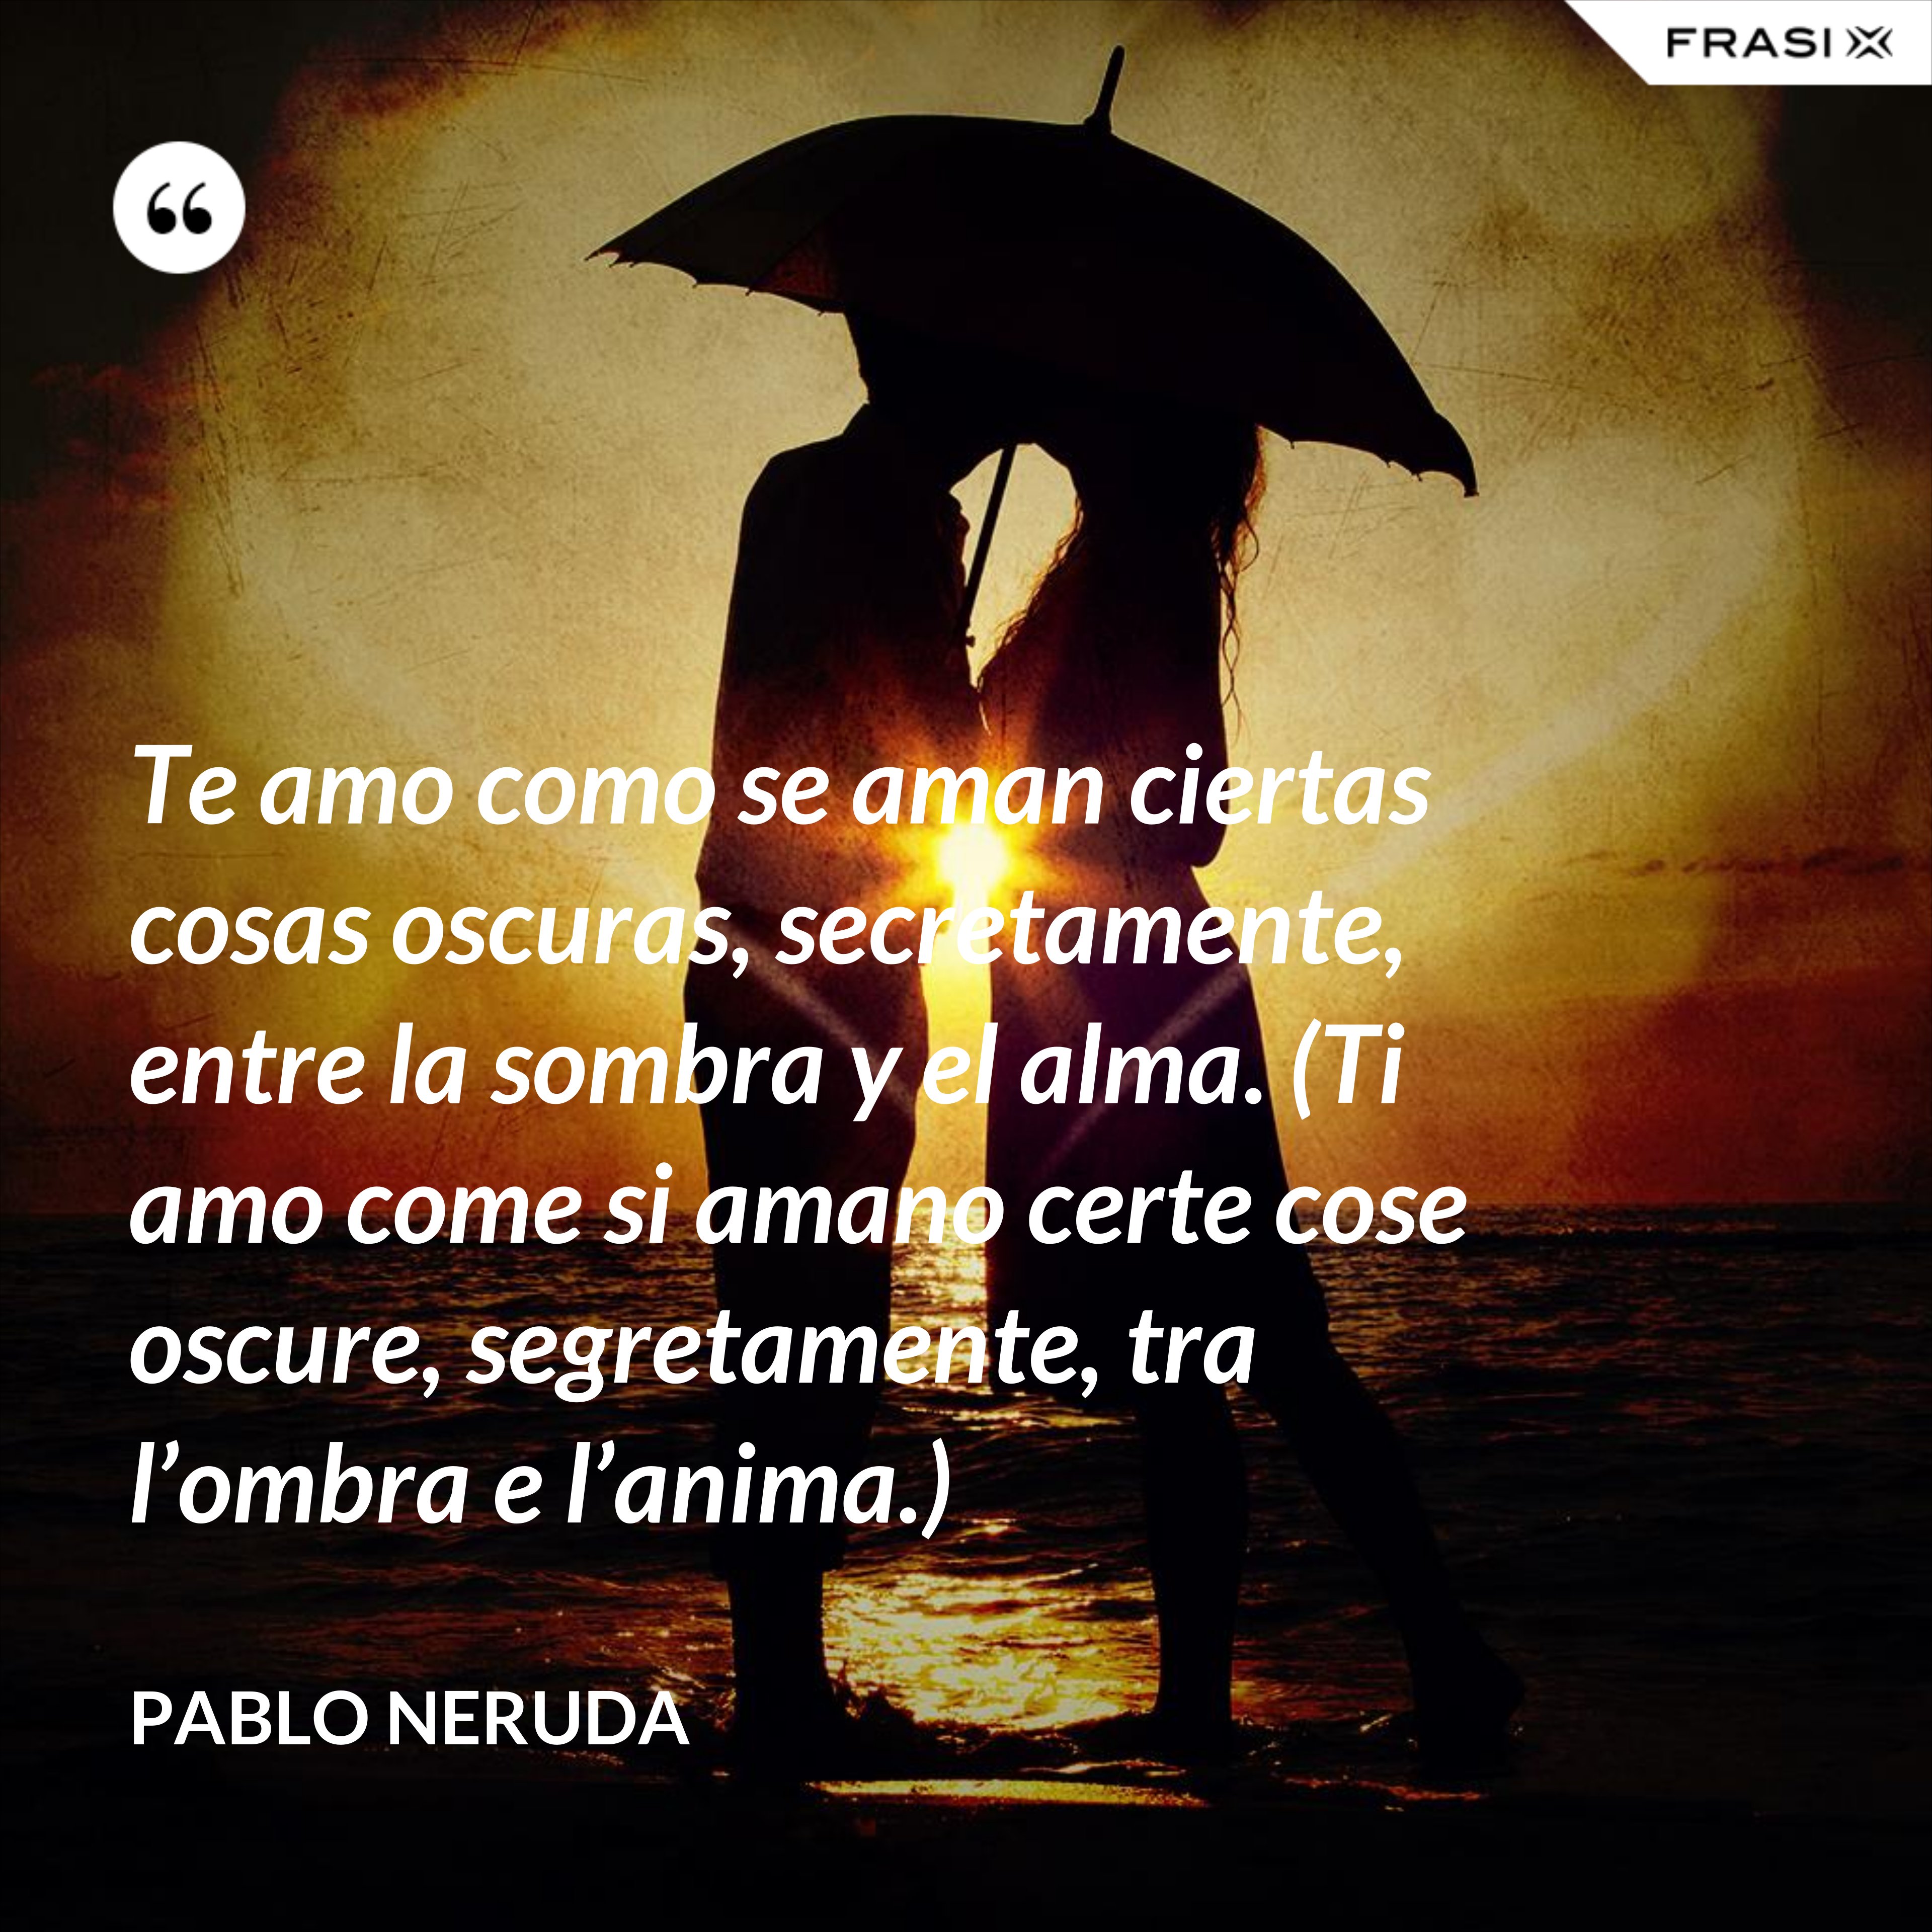 Te amo como se aman ciertas cosas oscuras, secretamente, entre la sombra y el alma. (Ti amo come si amano certe cose oscure, segretamente, tra l’ombra e l’anima.) - Pablo Neruda